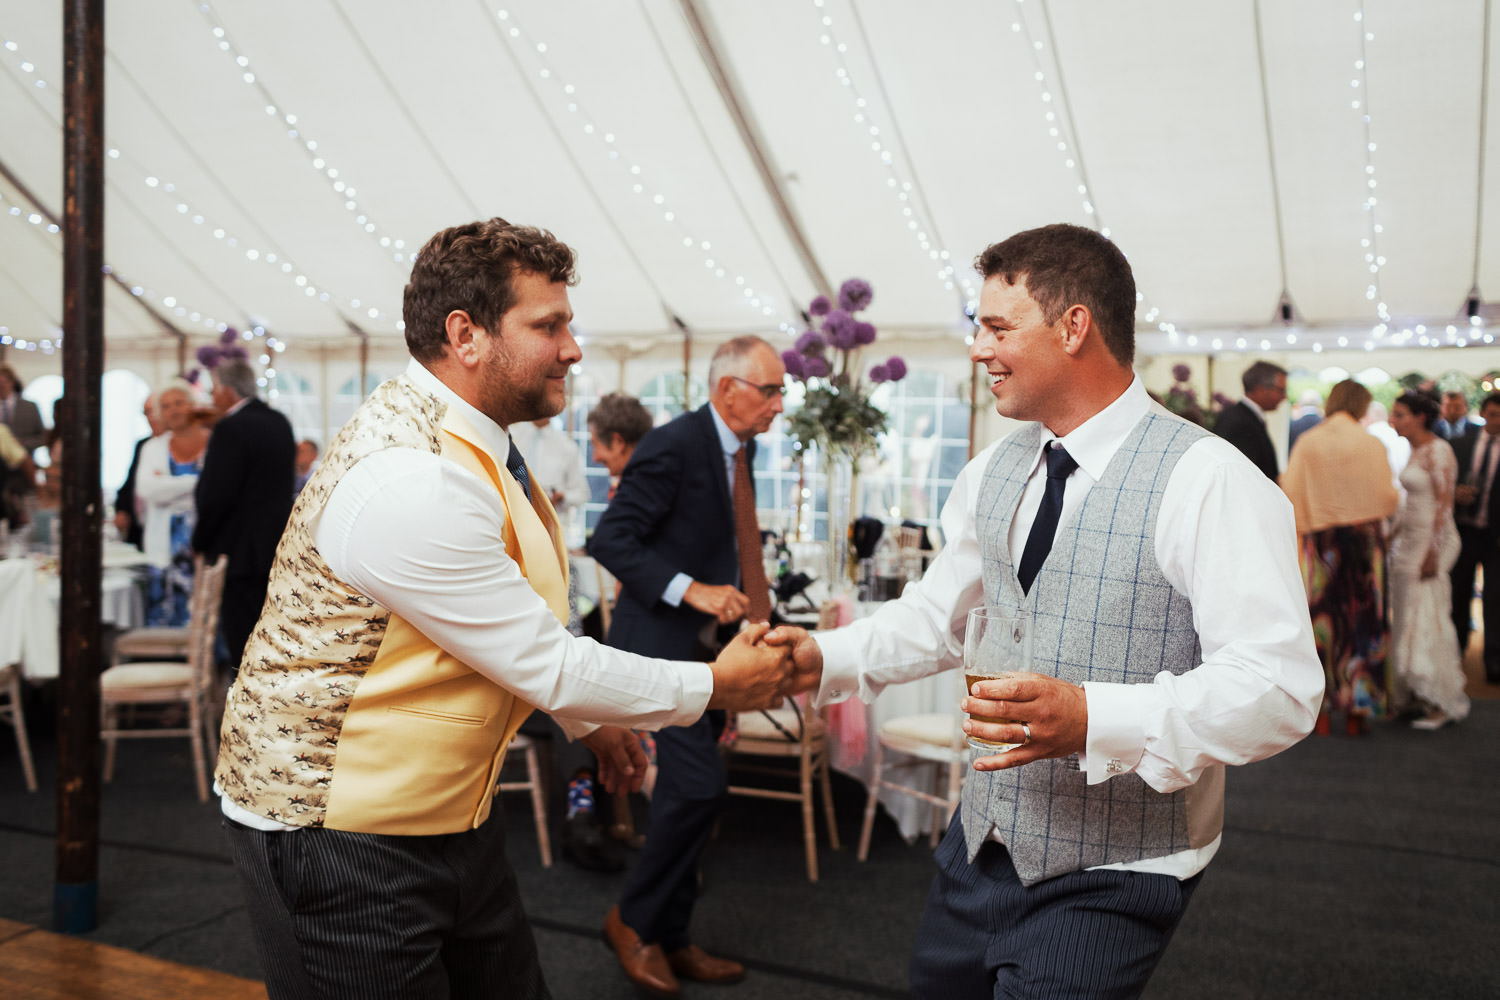 Two men dancing at a wedding.